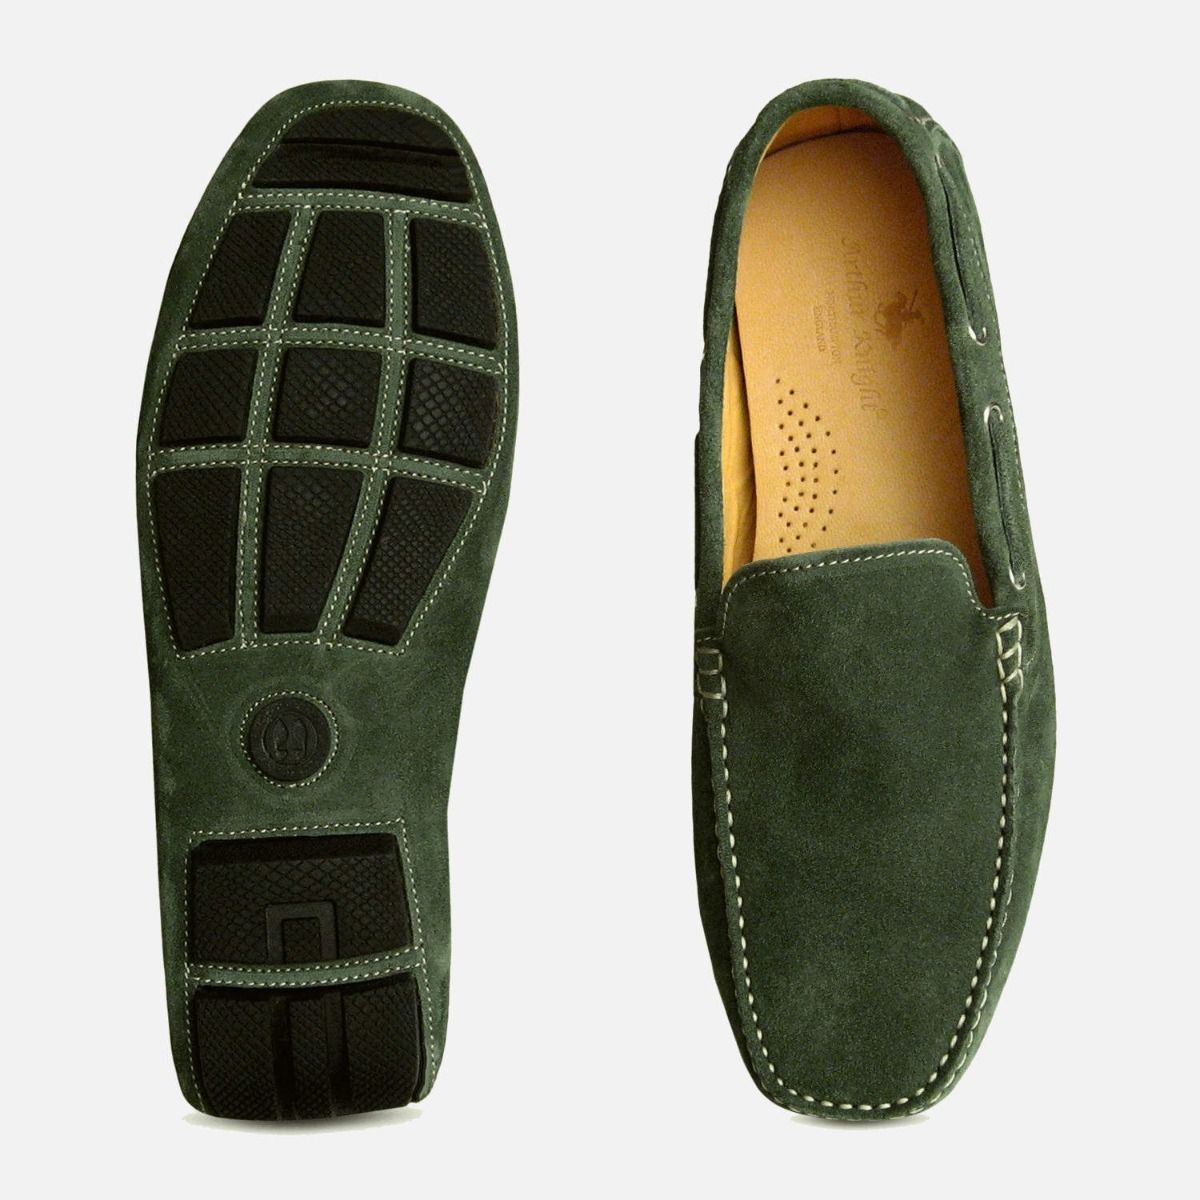 moss green shoes